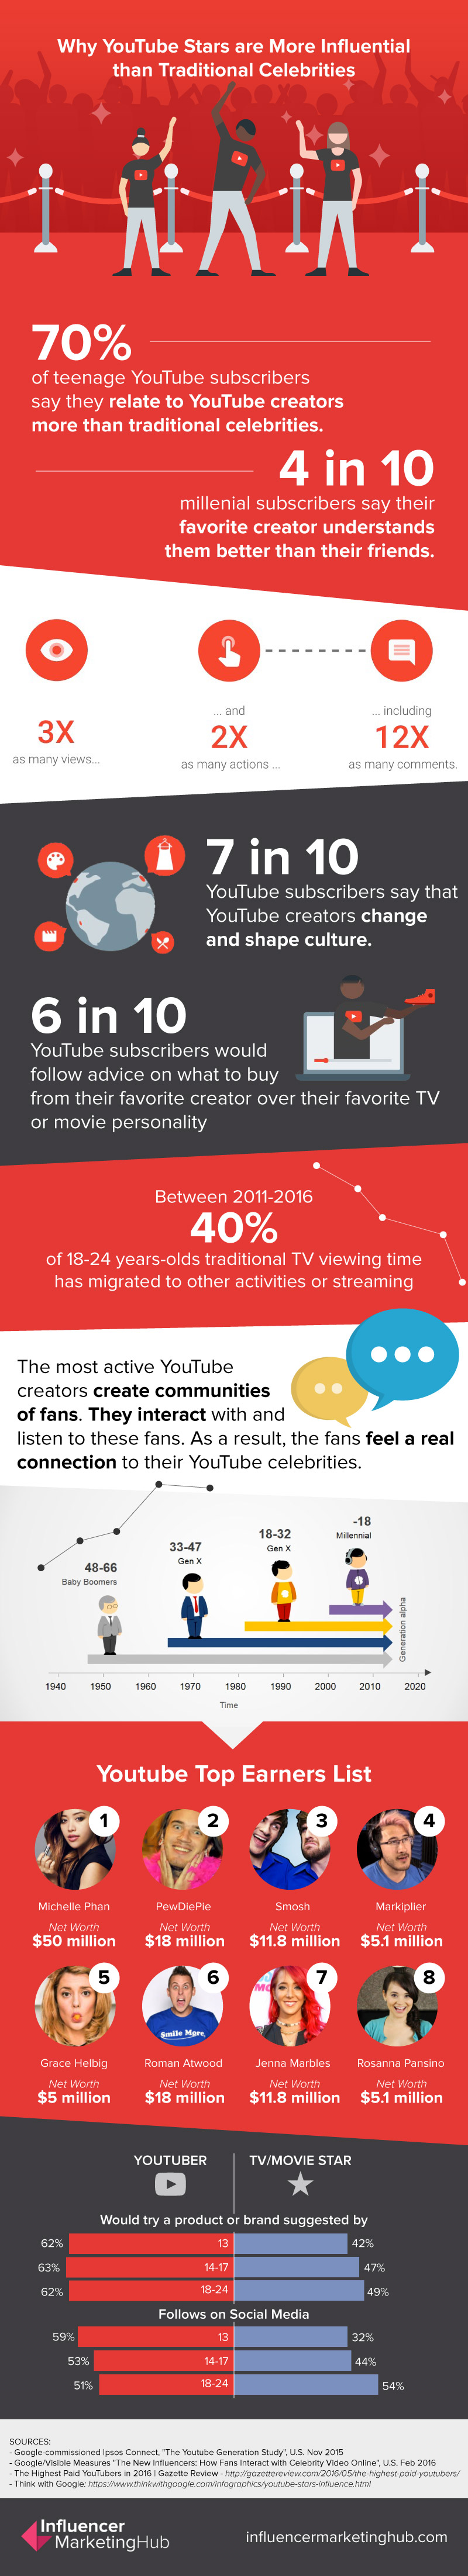 一个图表显示YouTu的原因be Stars are More Influential than Traditional Celebrities